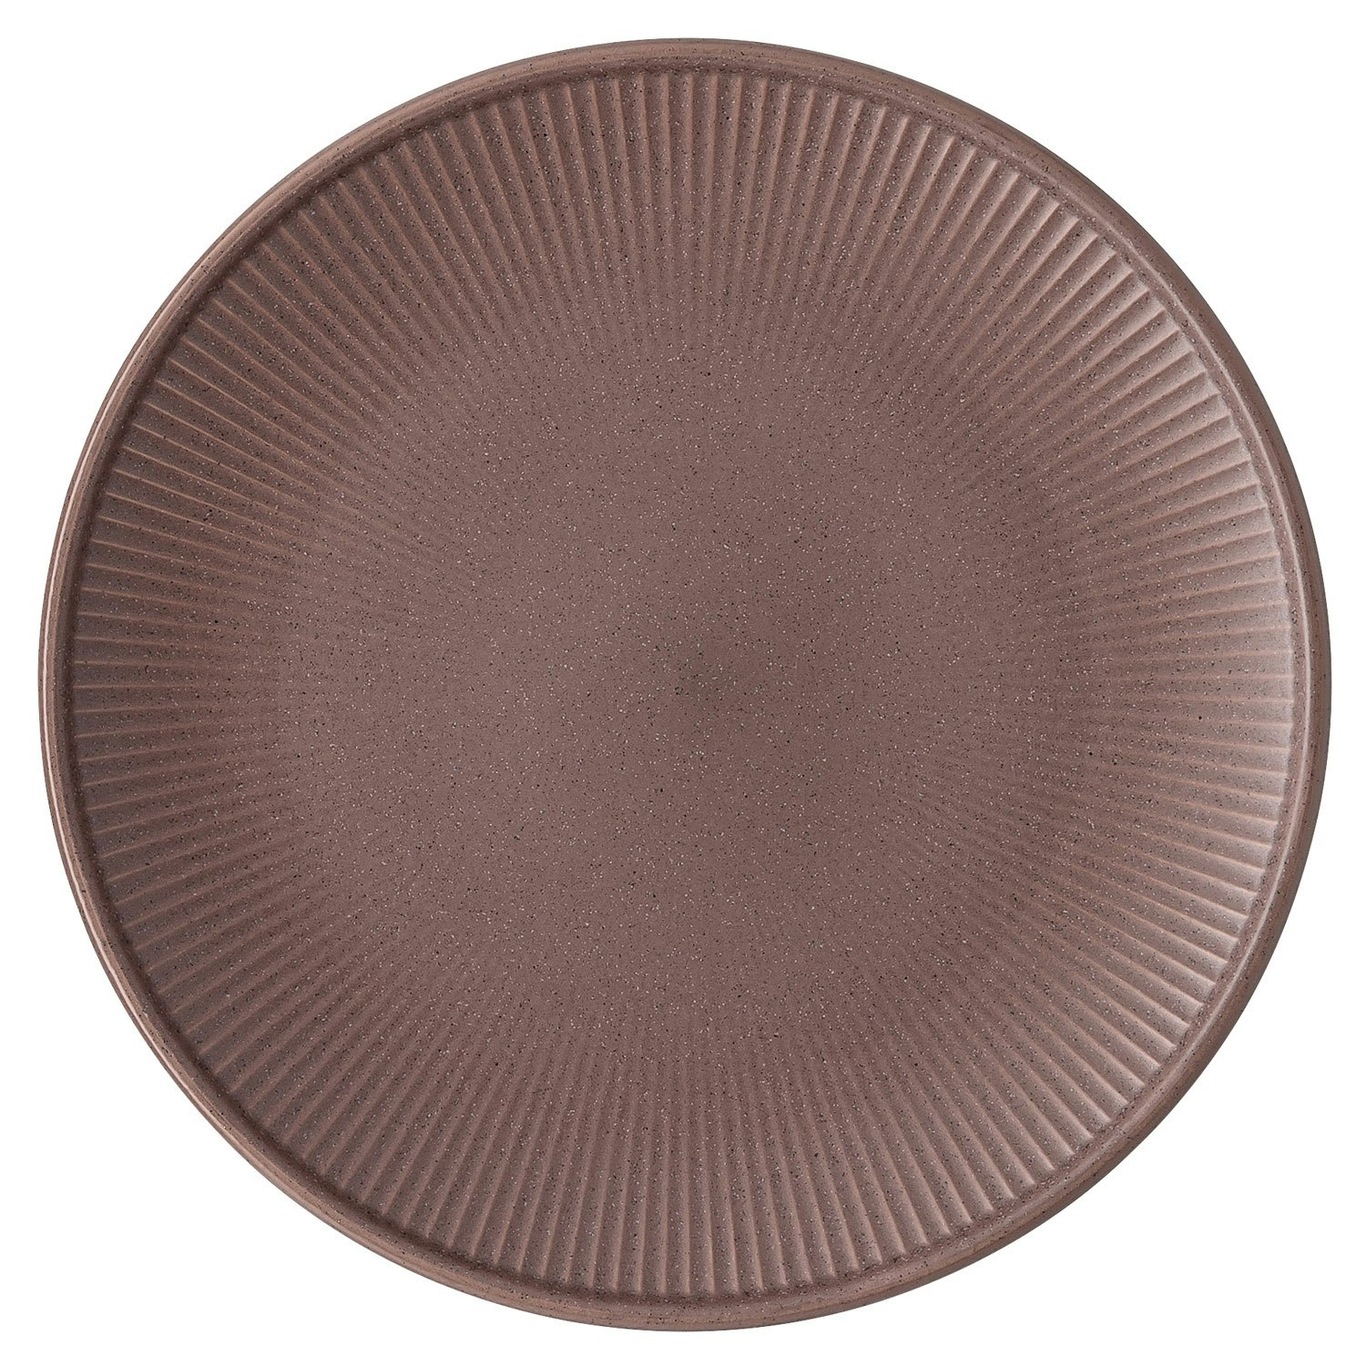 Thomas Clay Plate 27 cm, Rust